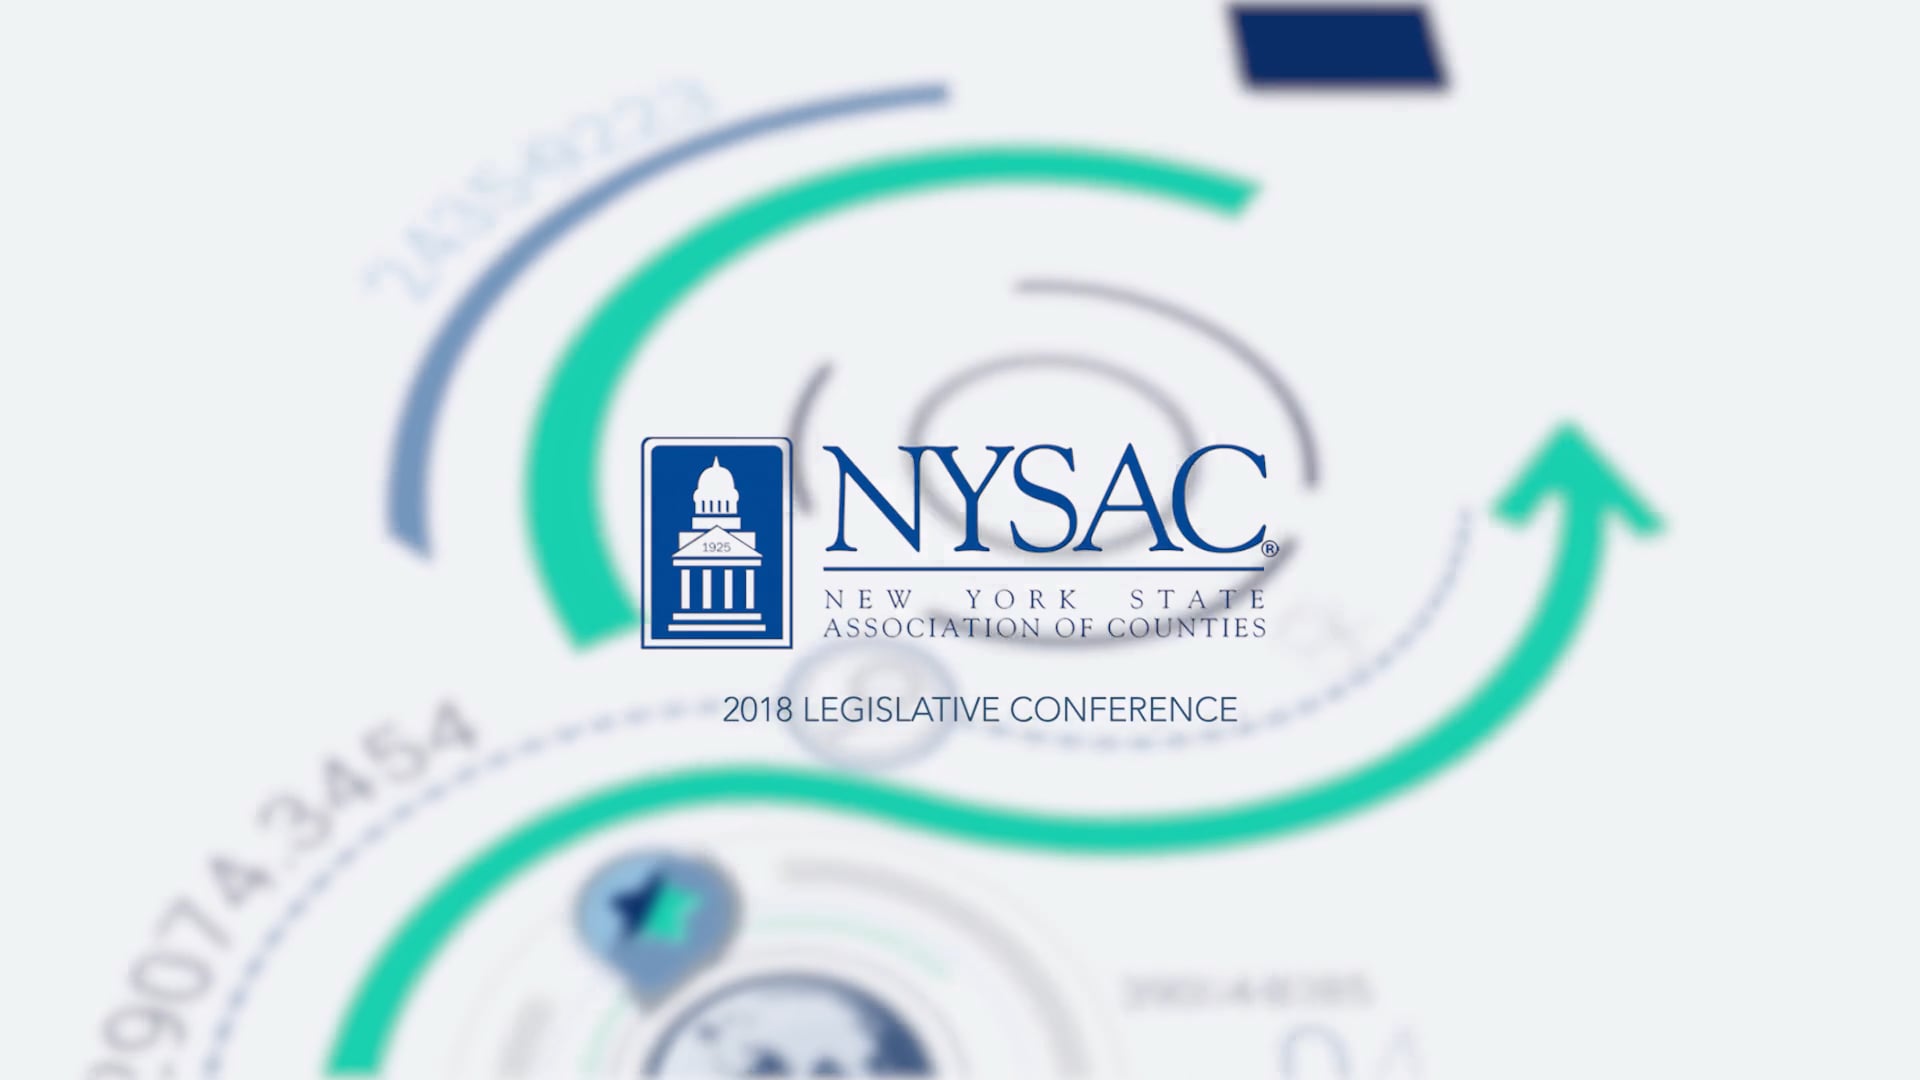 NYSAC 2018 Legislative Conference